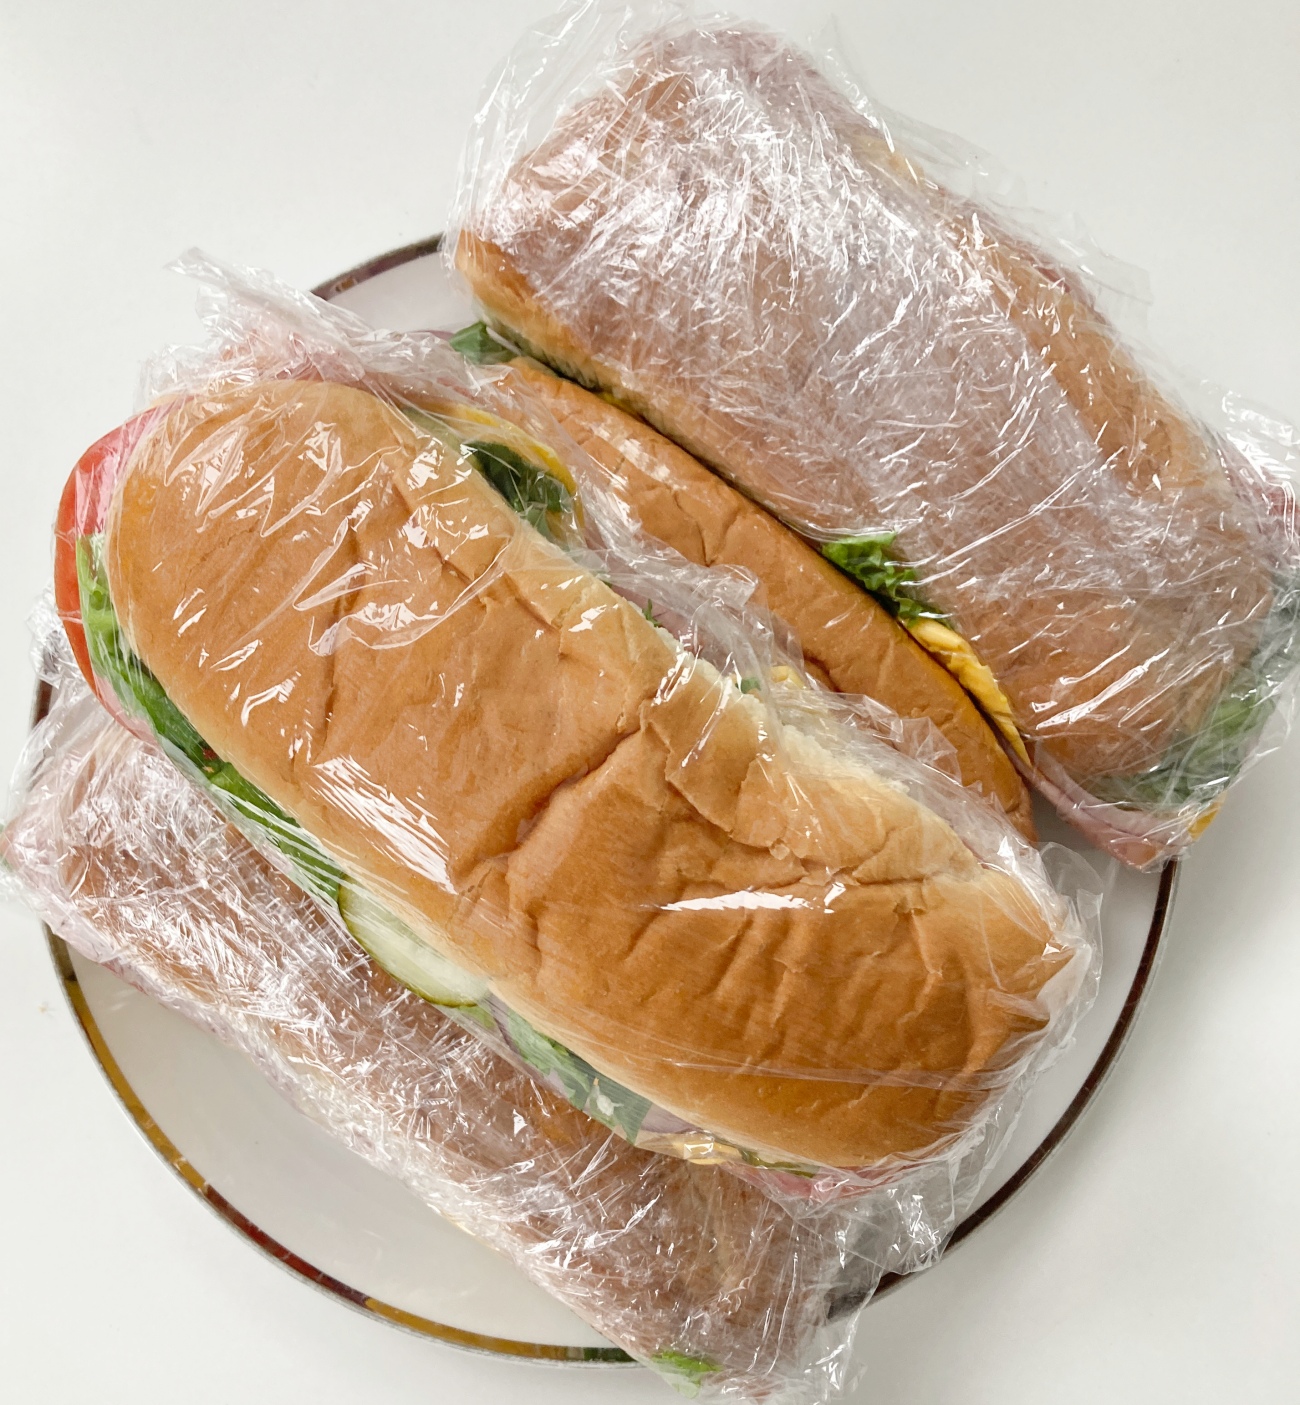 Kmart Sub Sandwiches